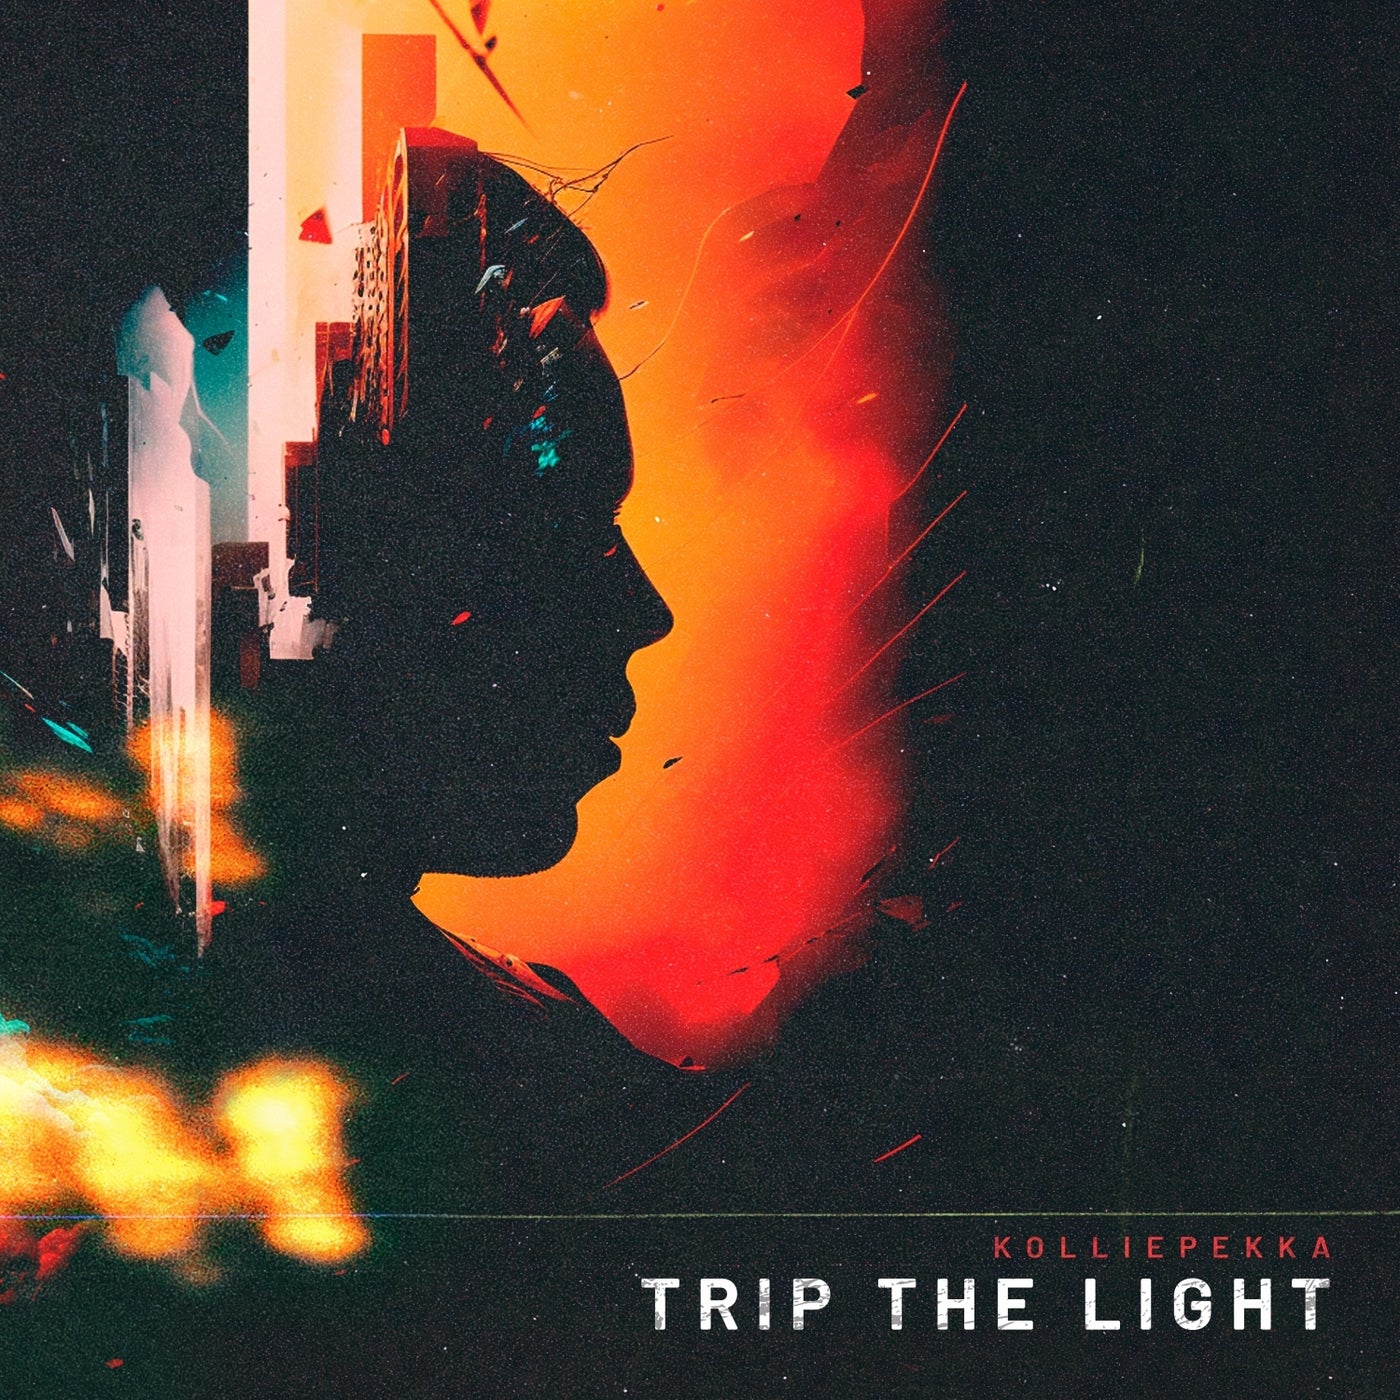 Trip the Light